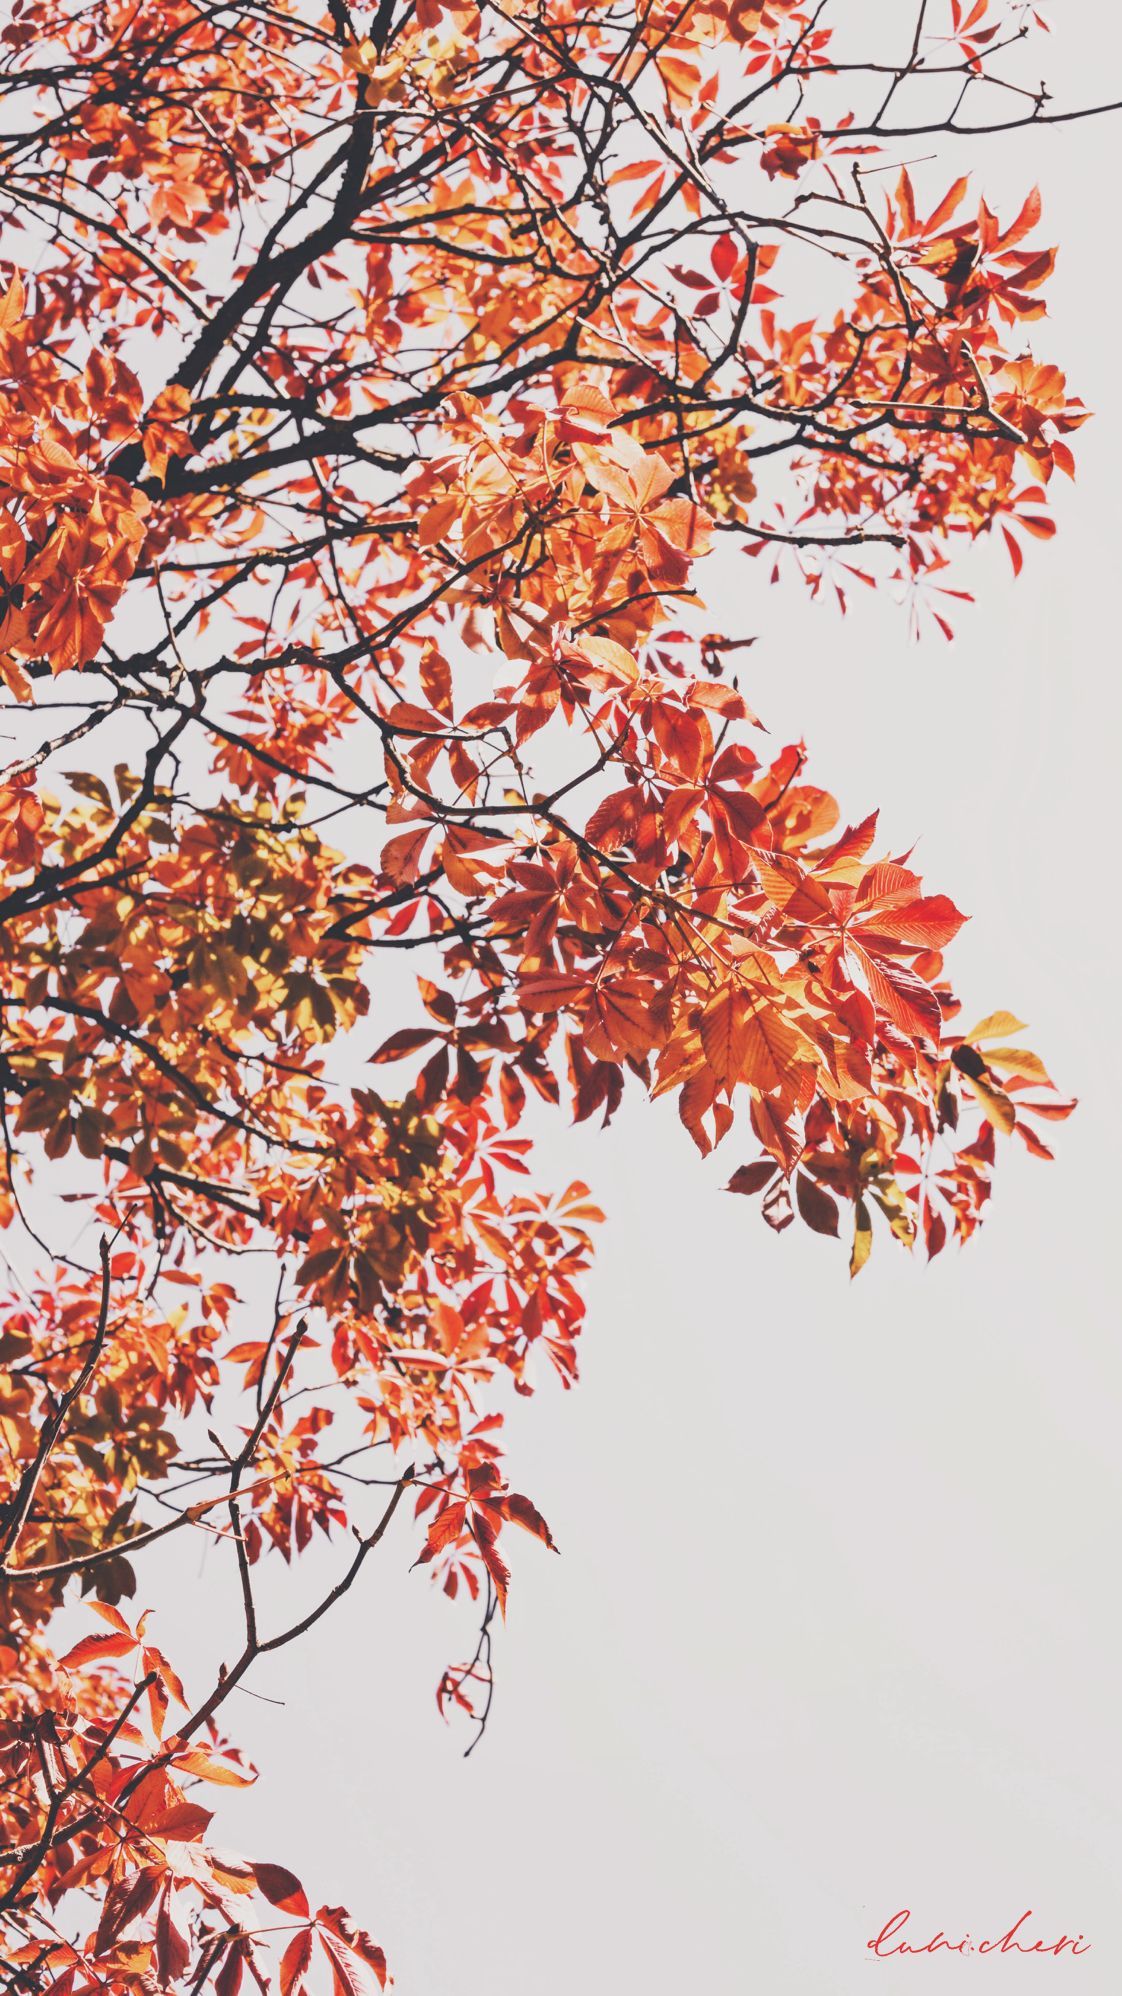 Free Download: Autumn Wallpaper ♥ Desktop Und Mobile Geräte. Fall Wallpaper, Cute Fall Wallpaper, Autumn Phone Wallpaper